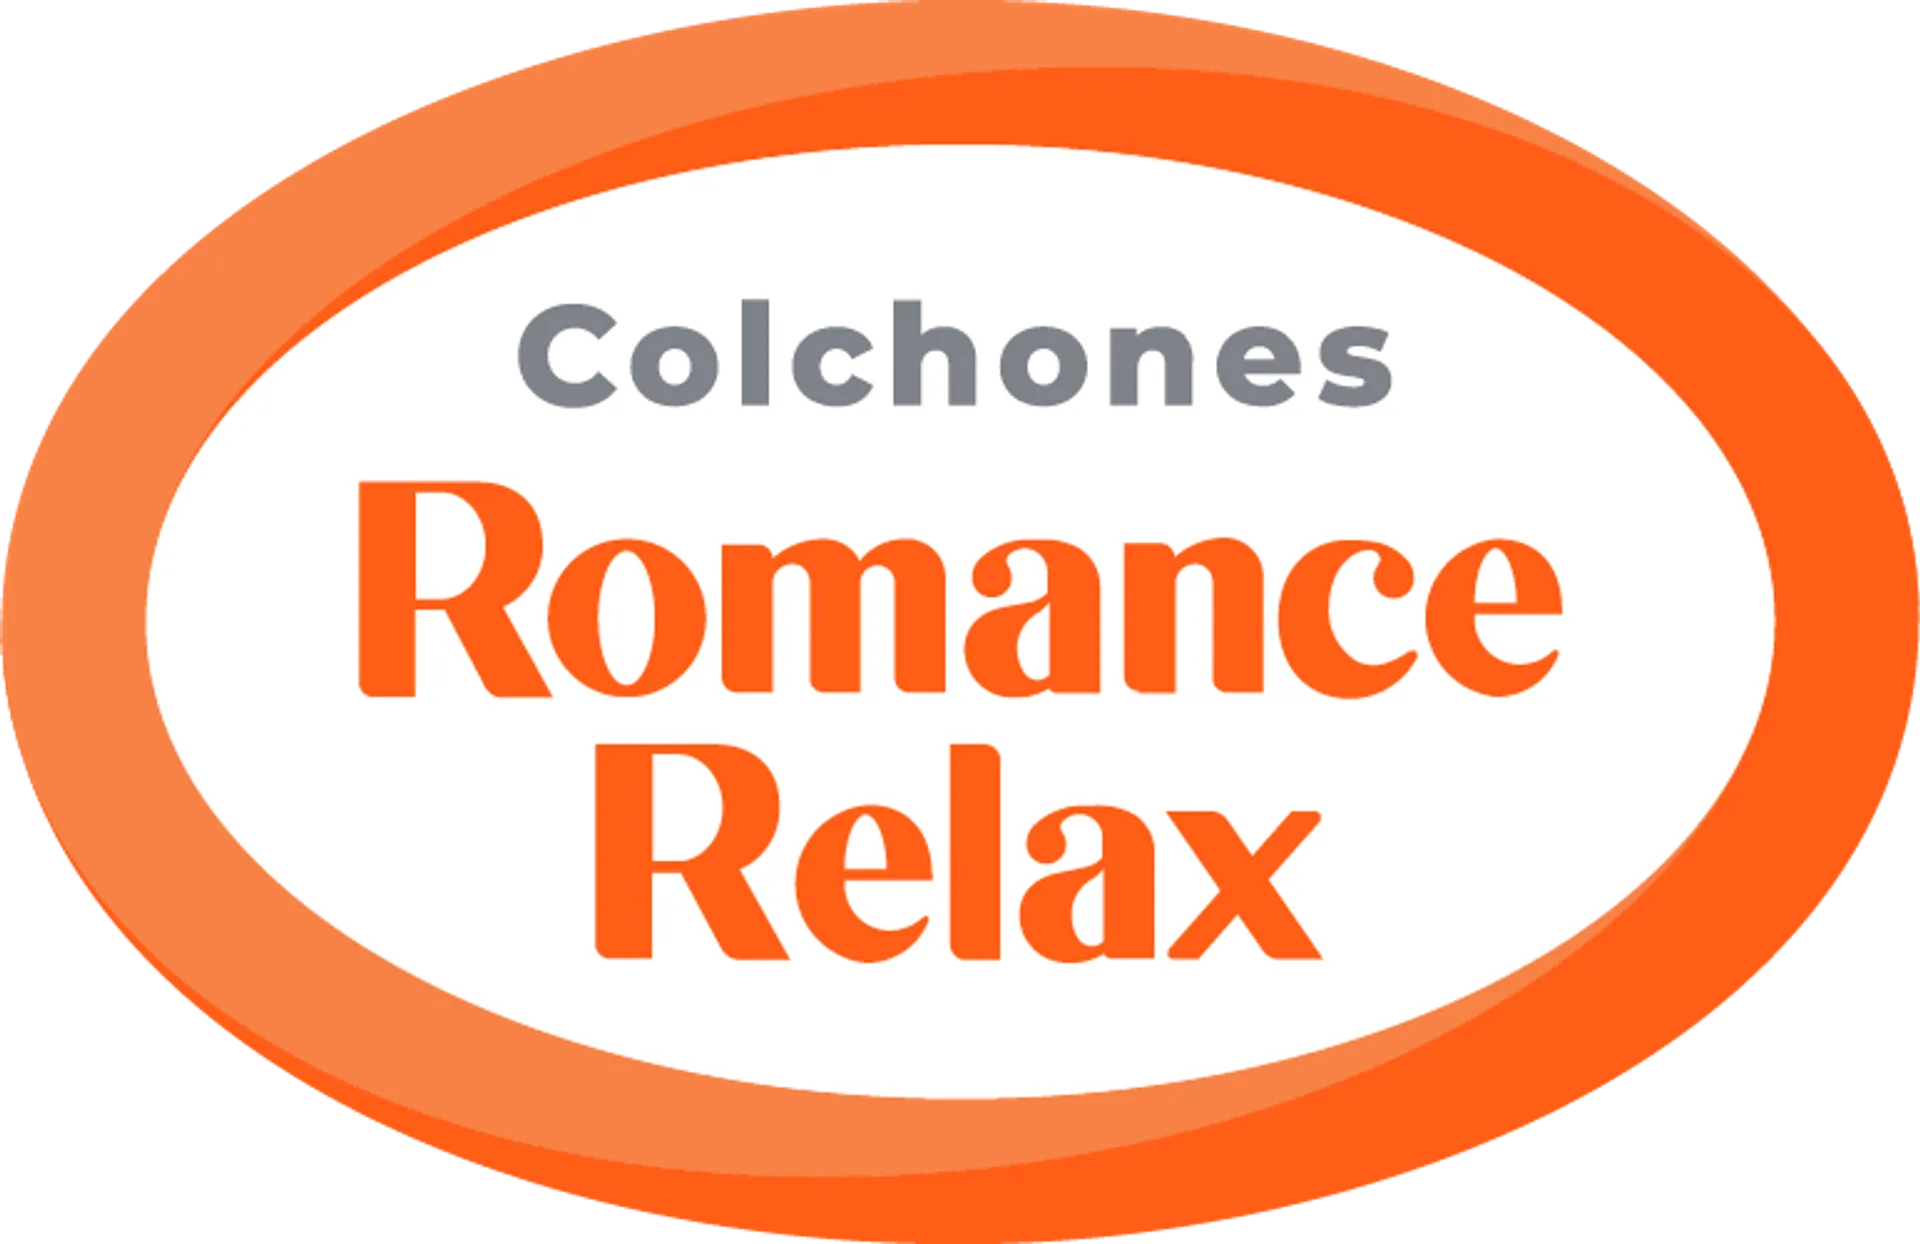 COLCHONES ROMANCE RELAX logo